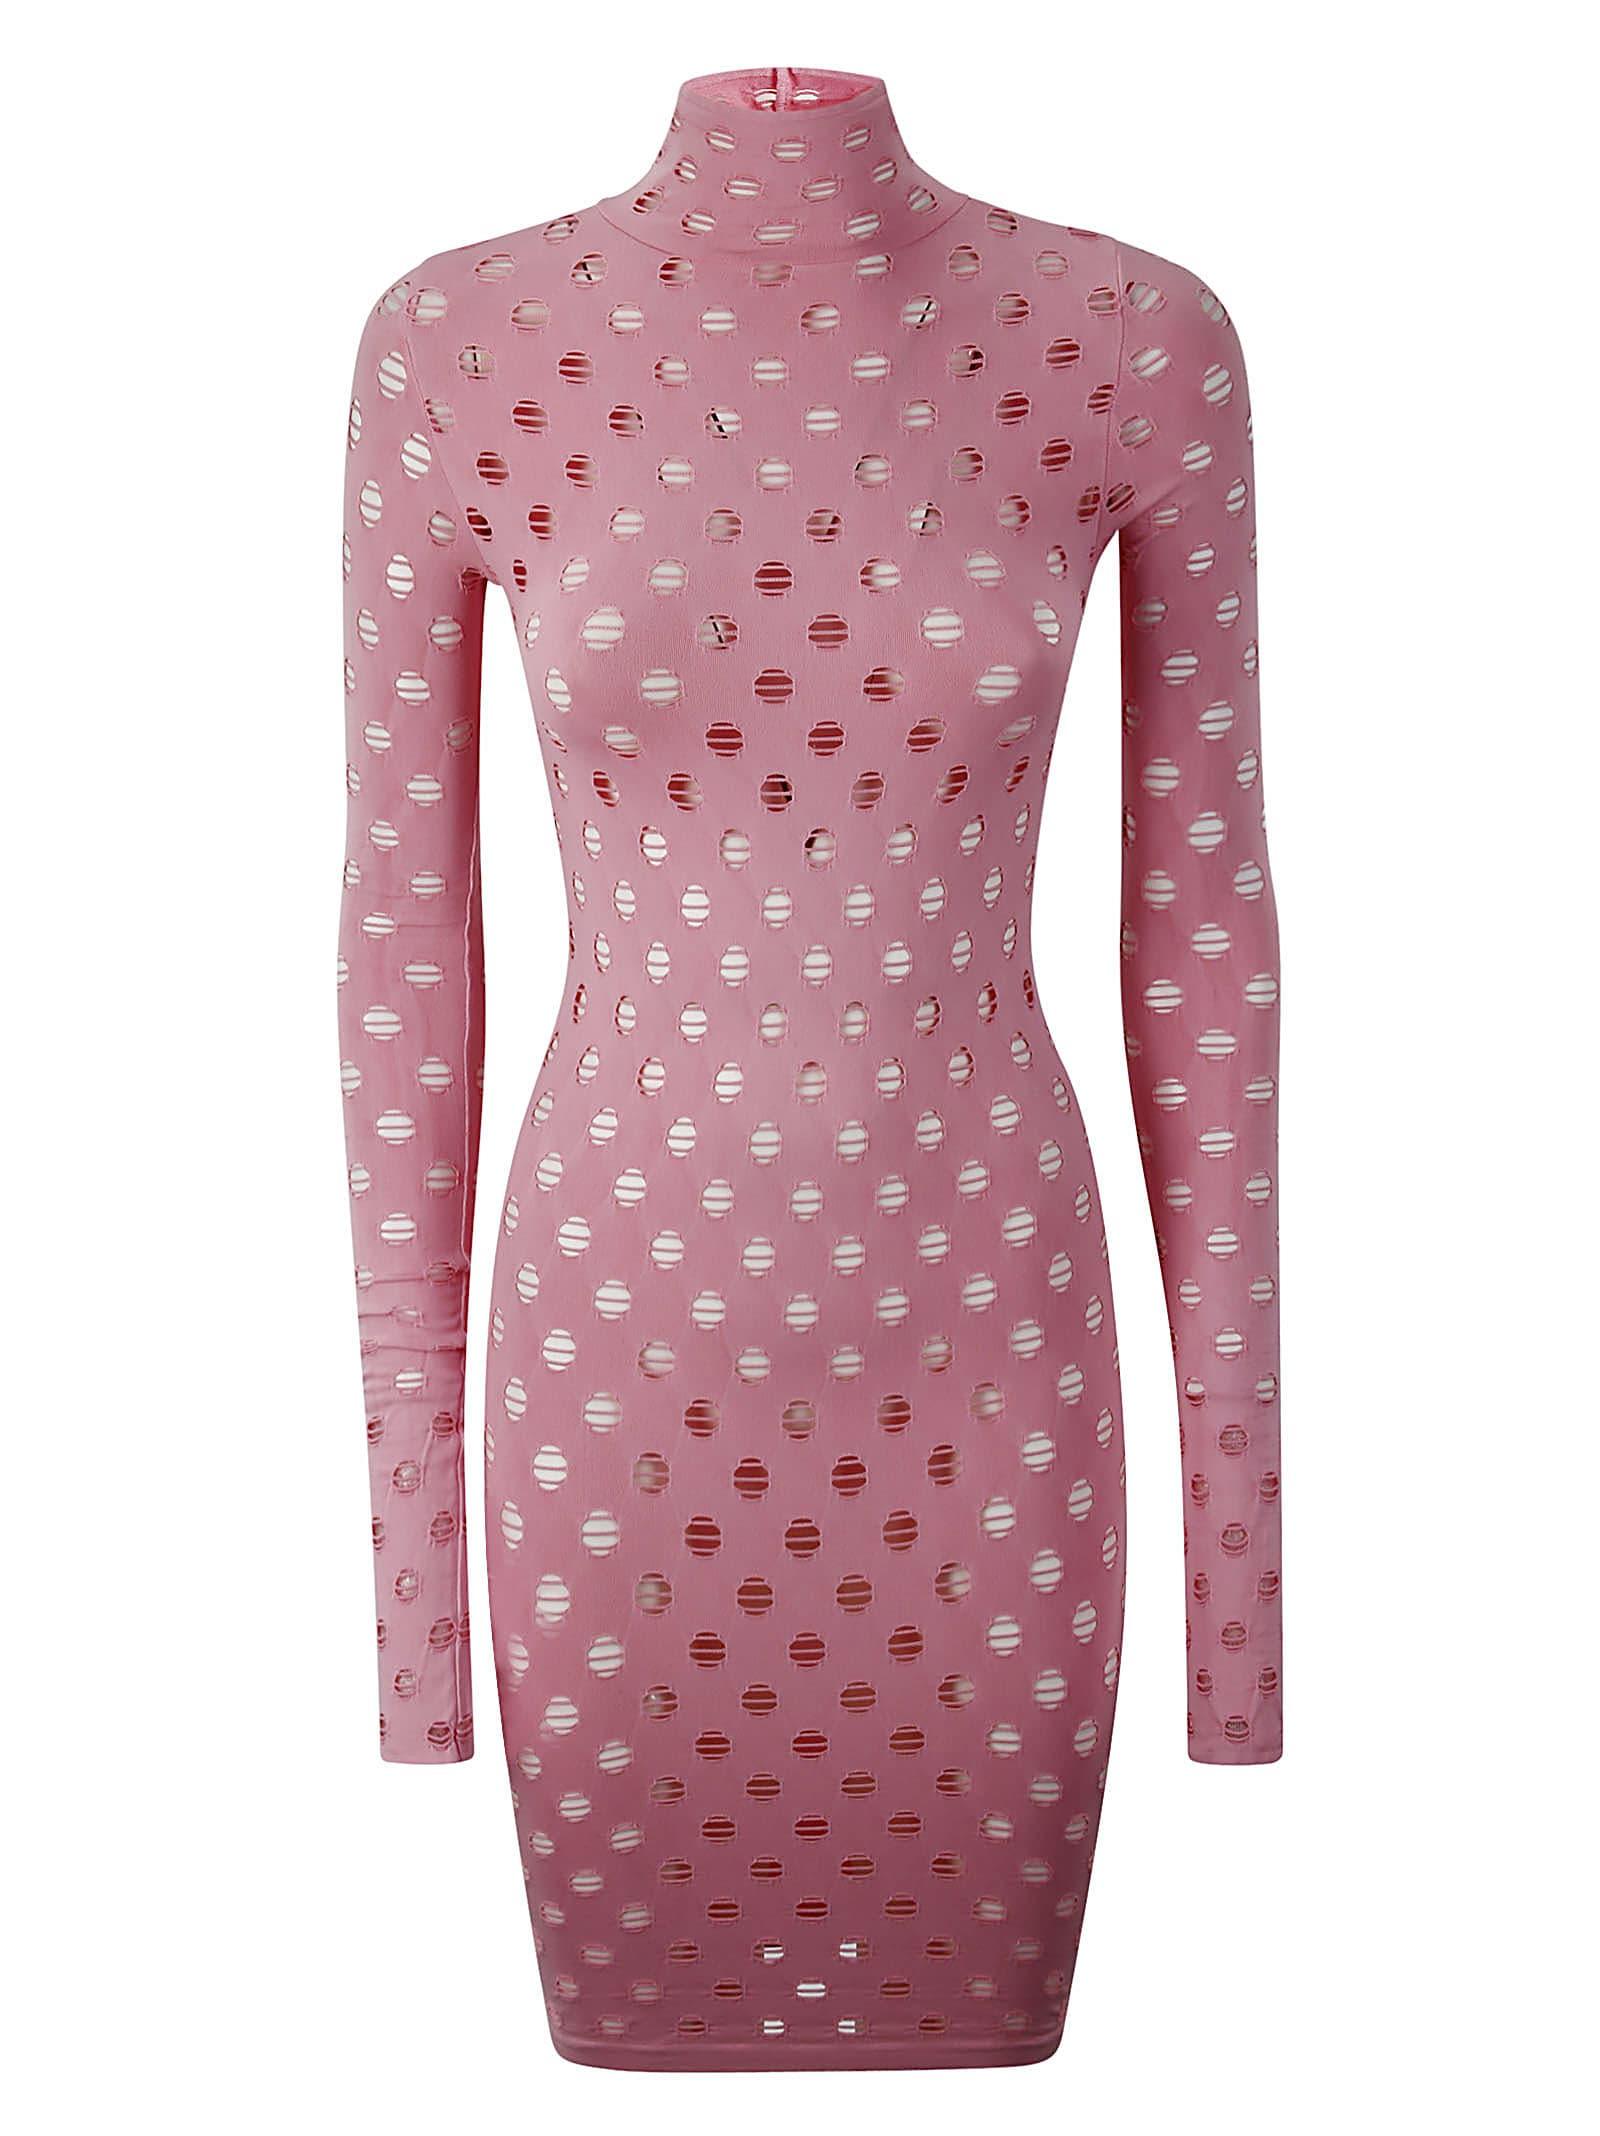 Maisie Wilen Perforated Turtleneck Dress in Pink | Lyst